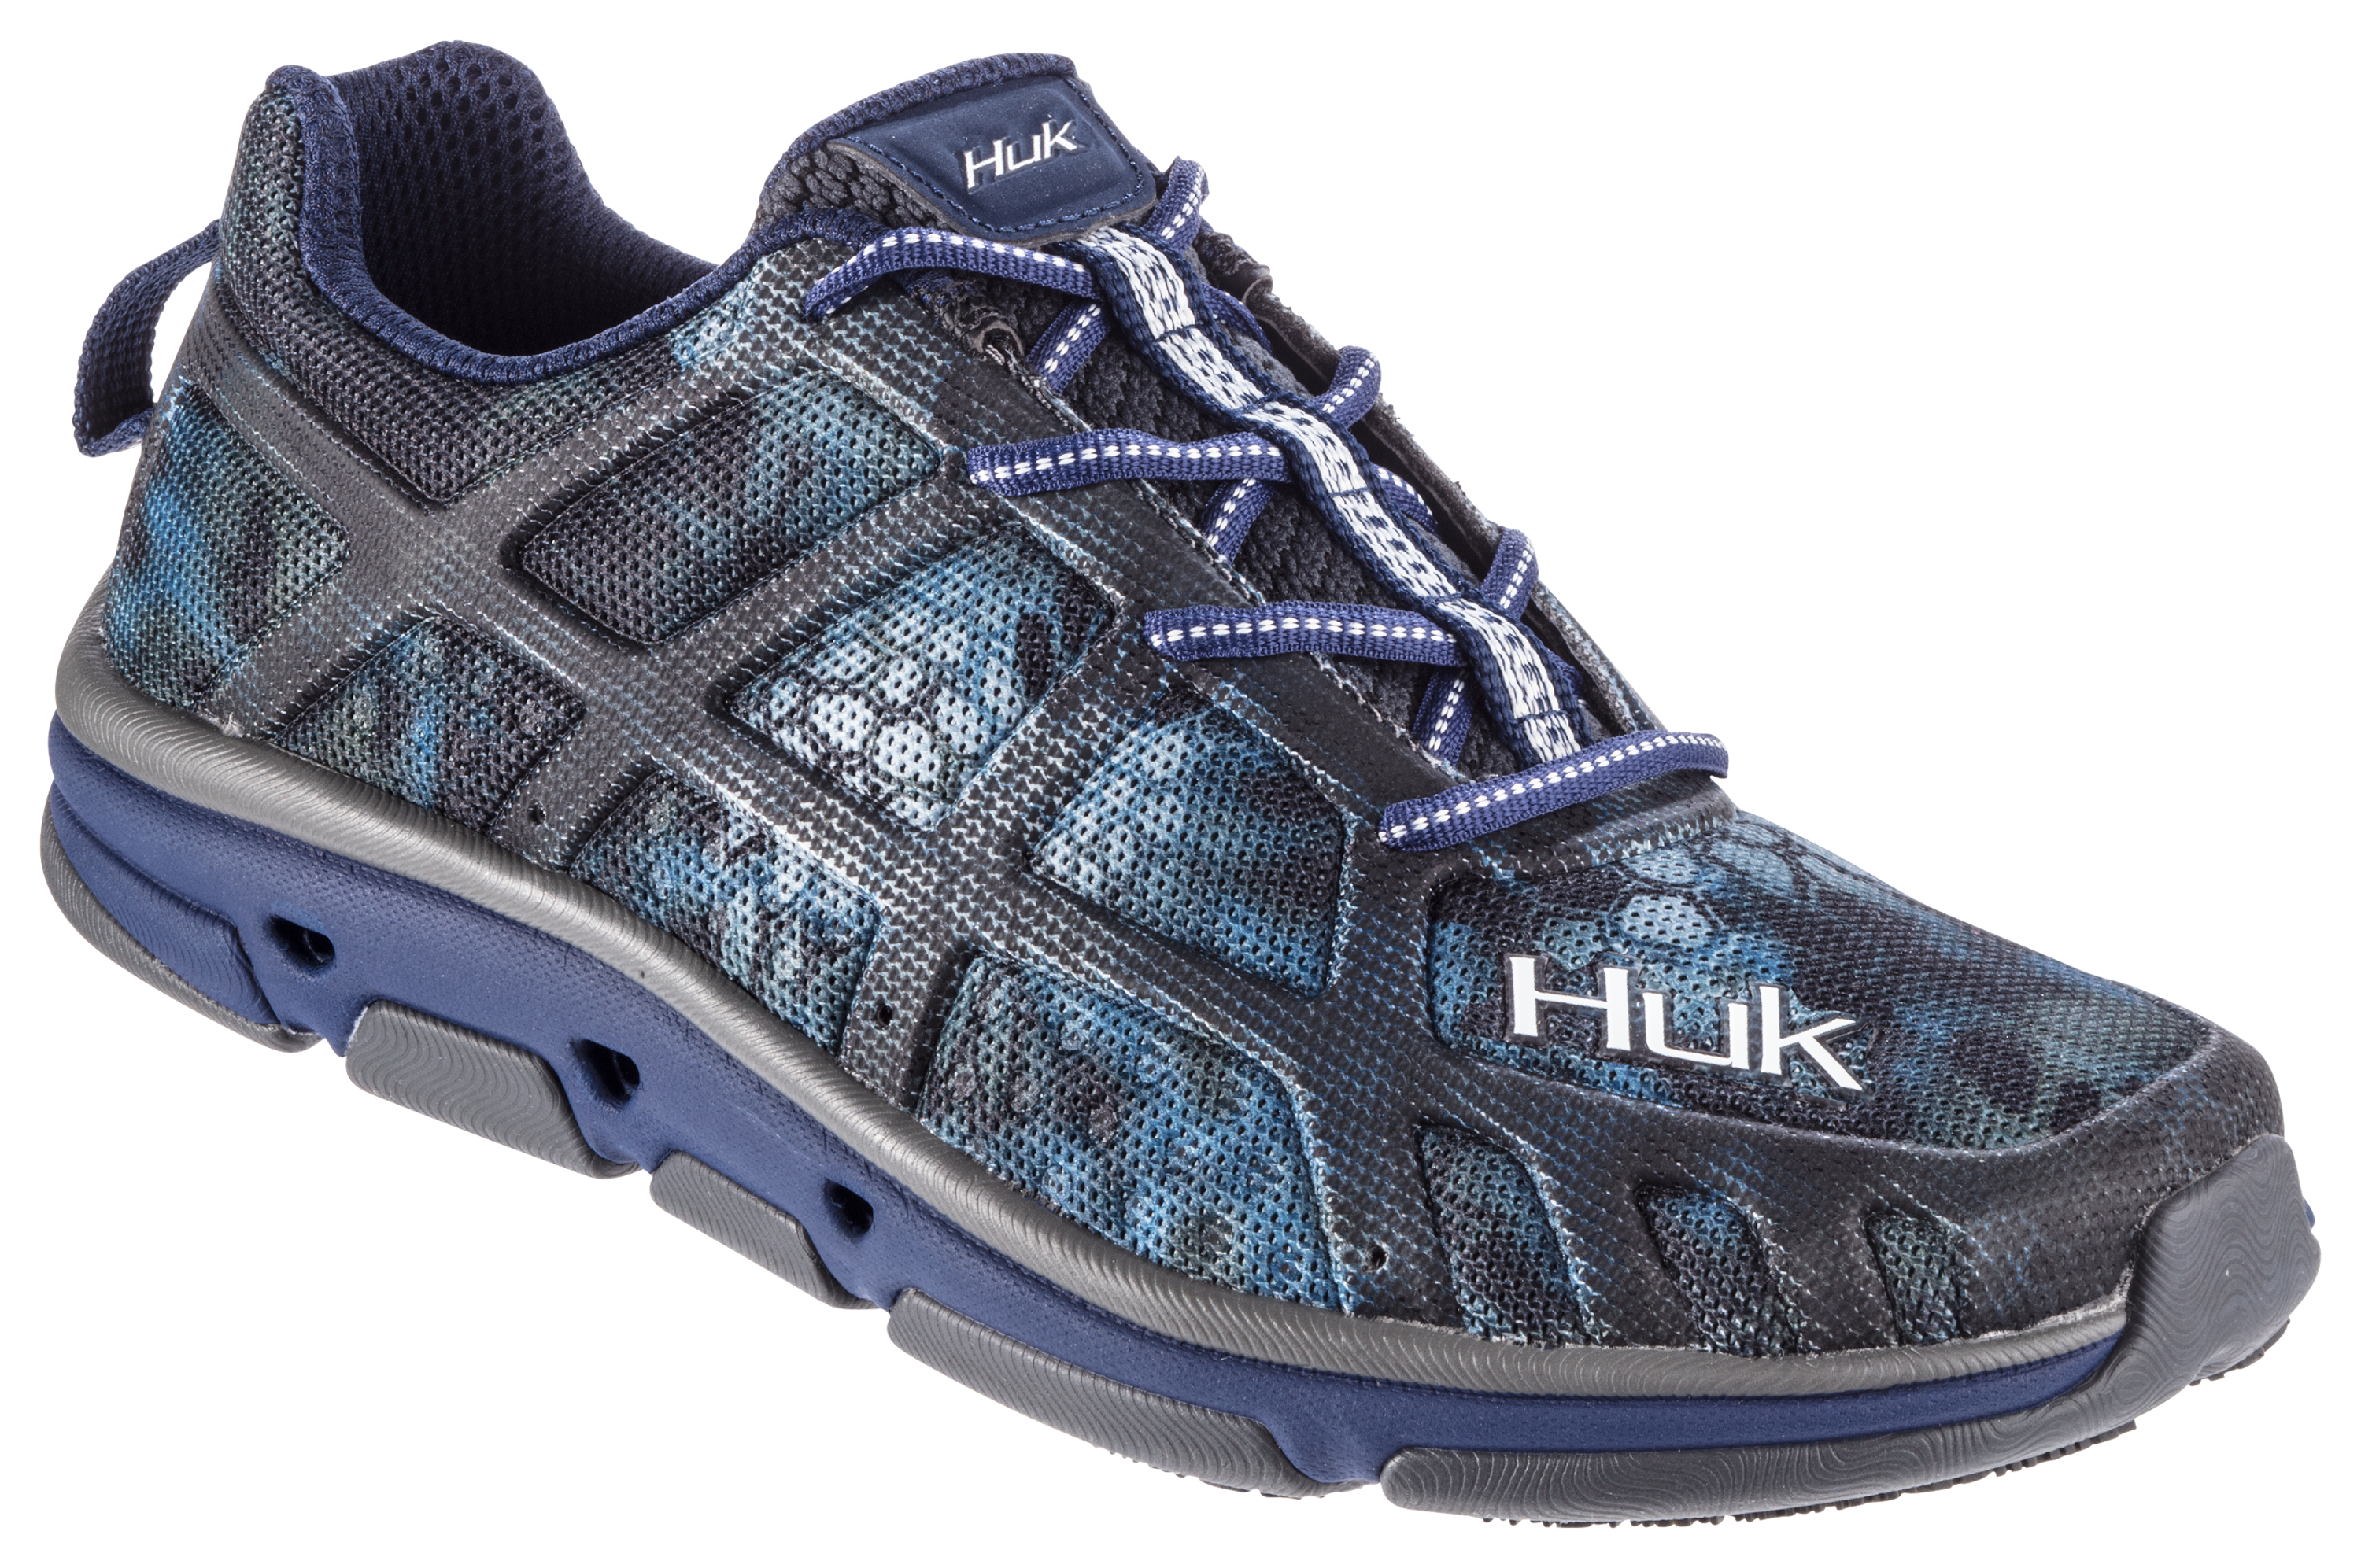 Huk Blue Boots for Men